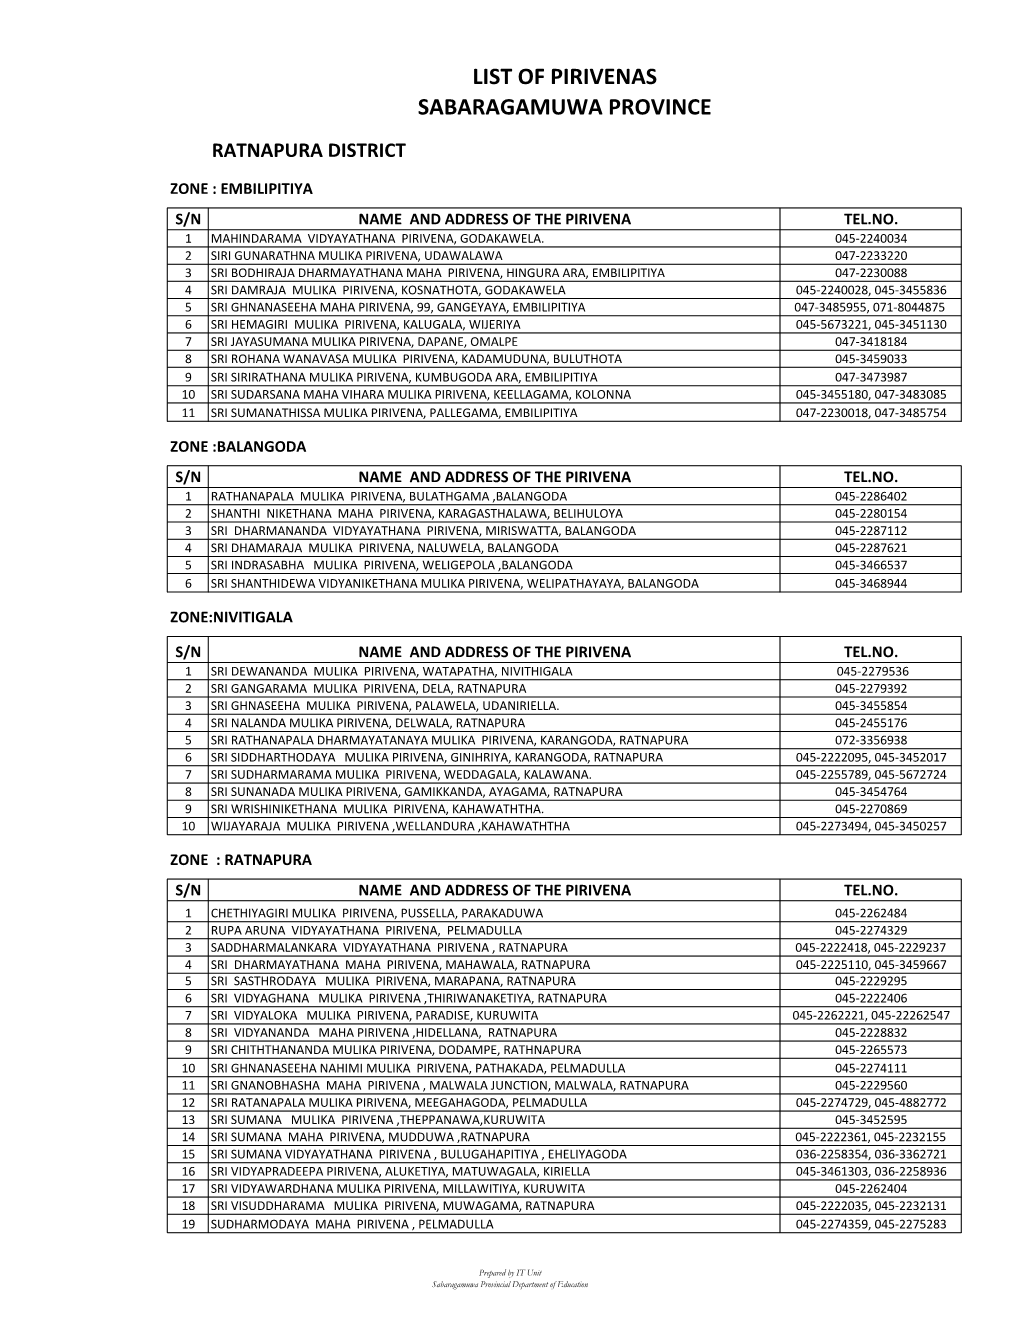 List of Pirivenas Sabaragamuwa Province Ratnapura District